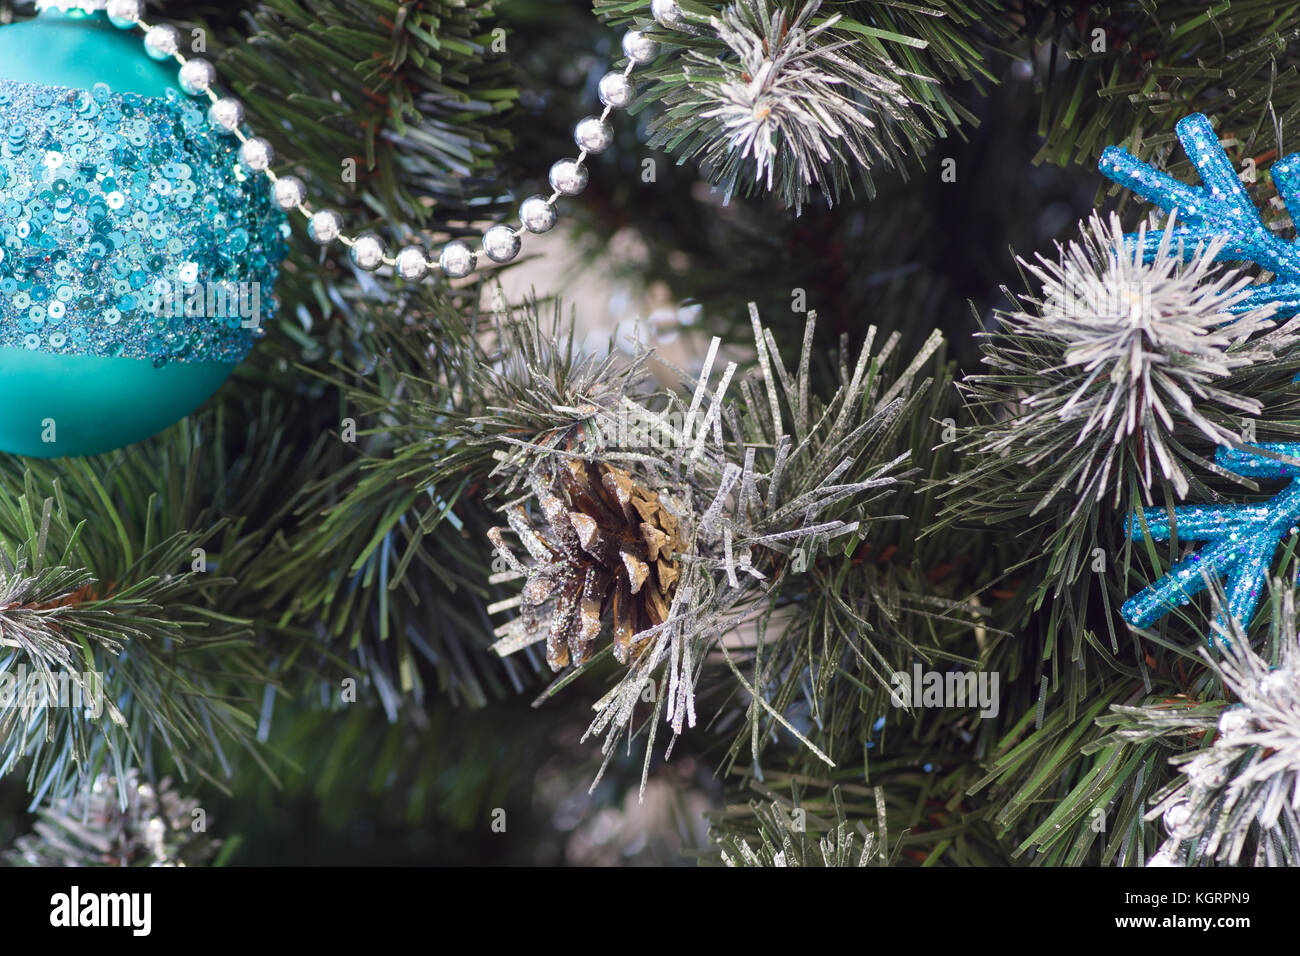 many beautiful decorations on the Christmas tree Stock Photo